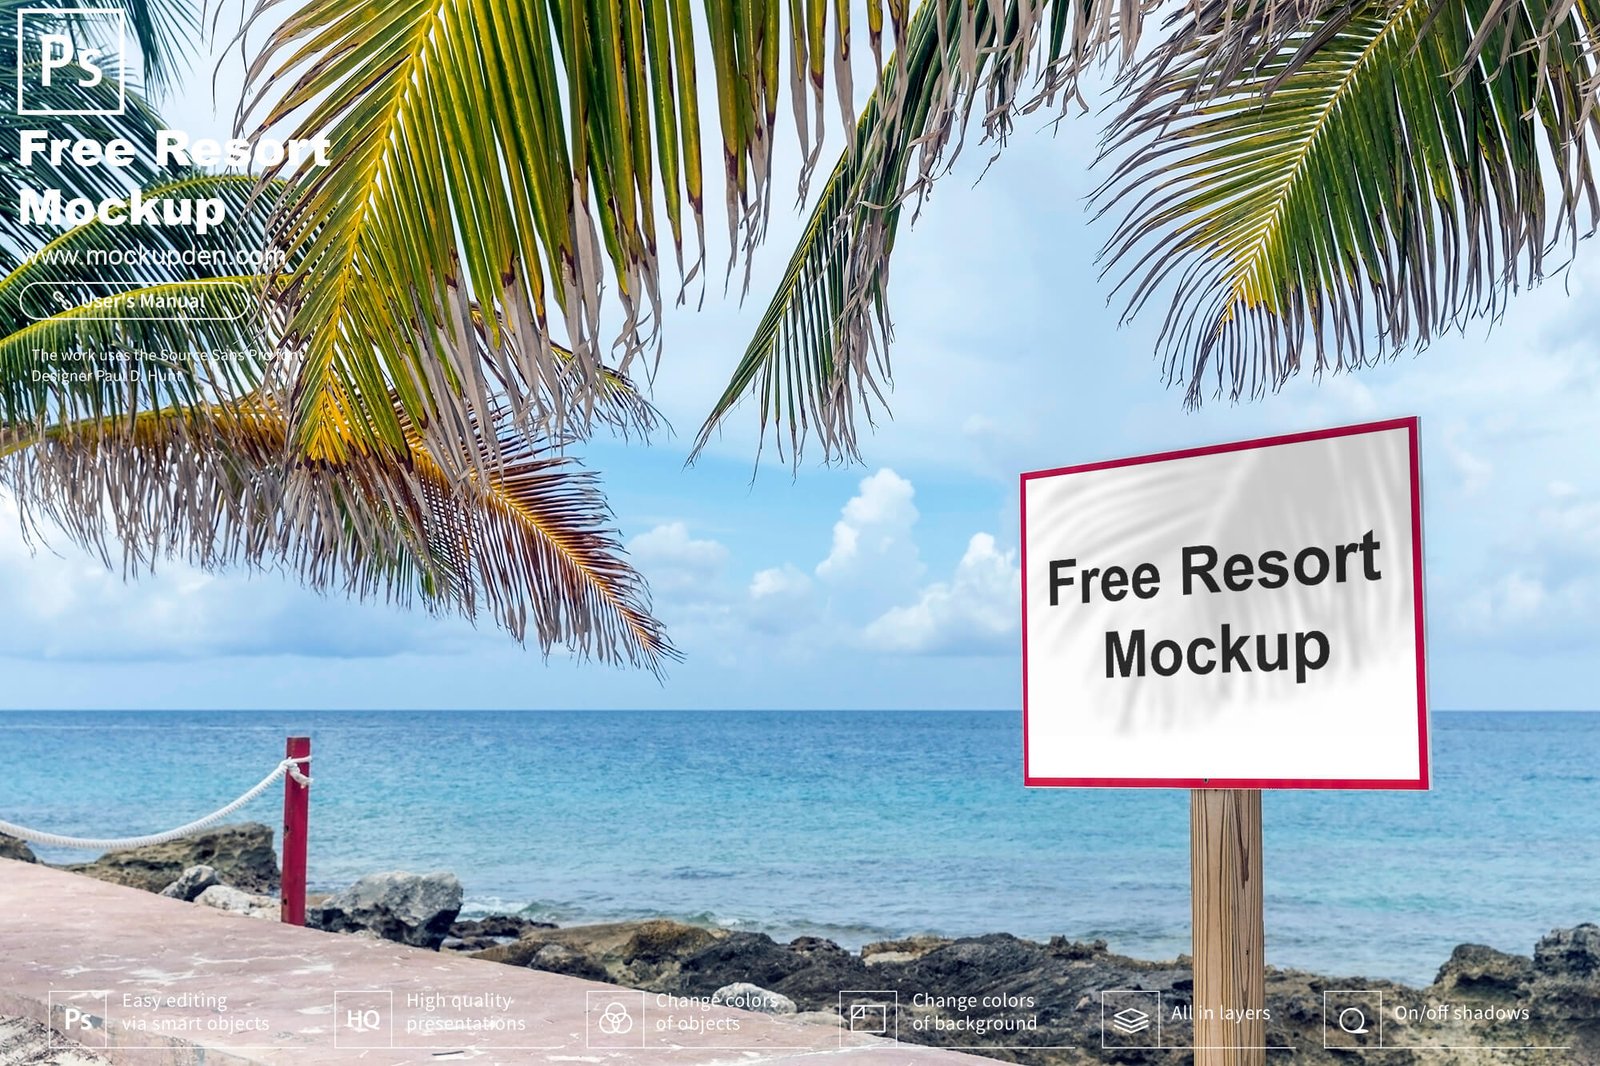 Free Resort Mockup PSD Template